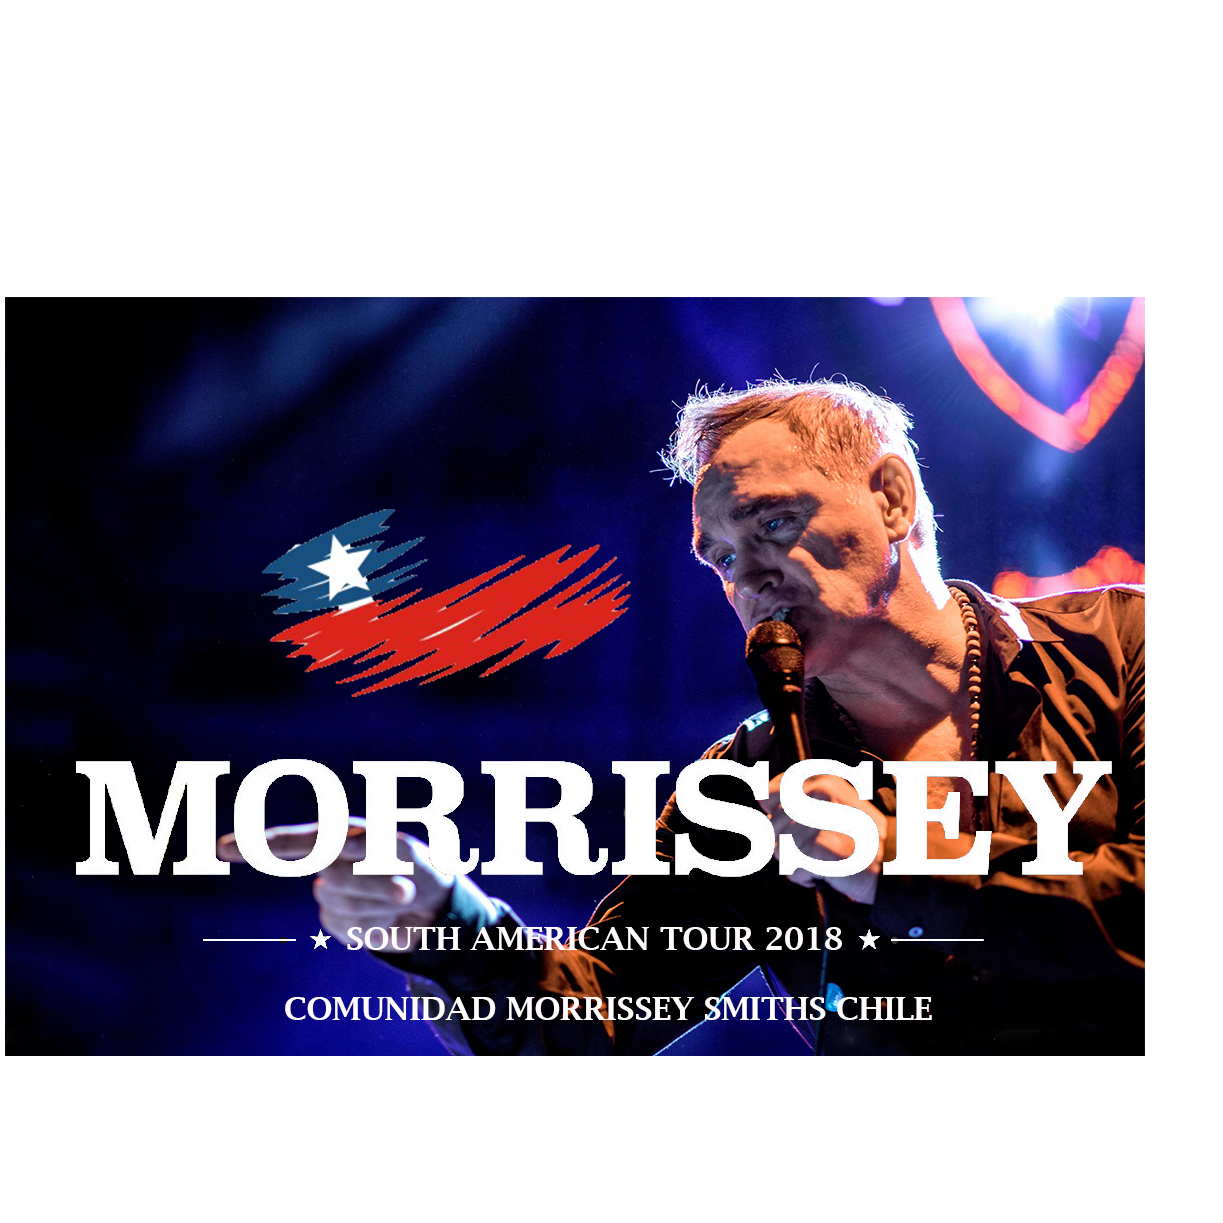 Comunidad Morrissey Smiths Chile